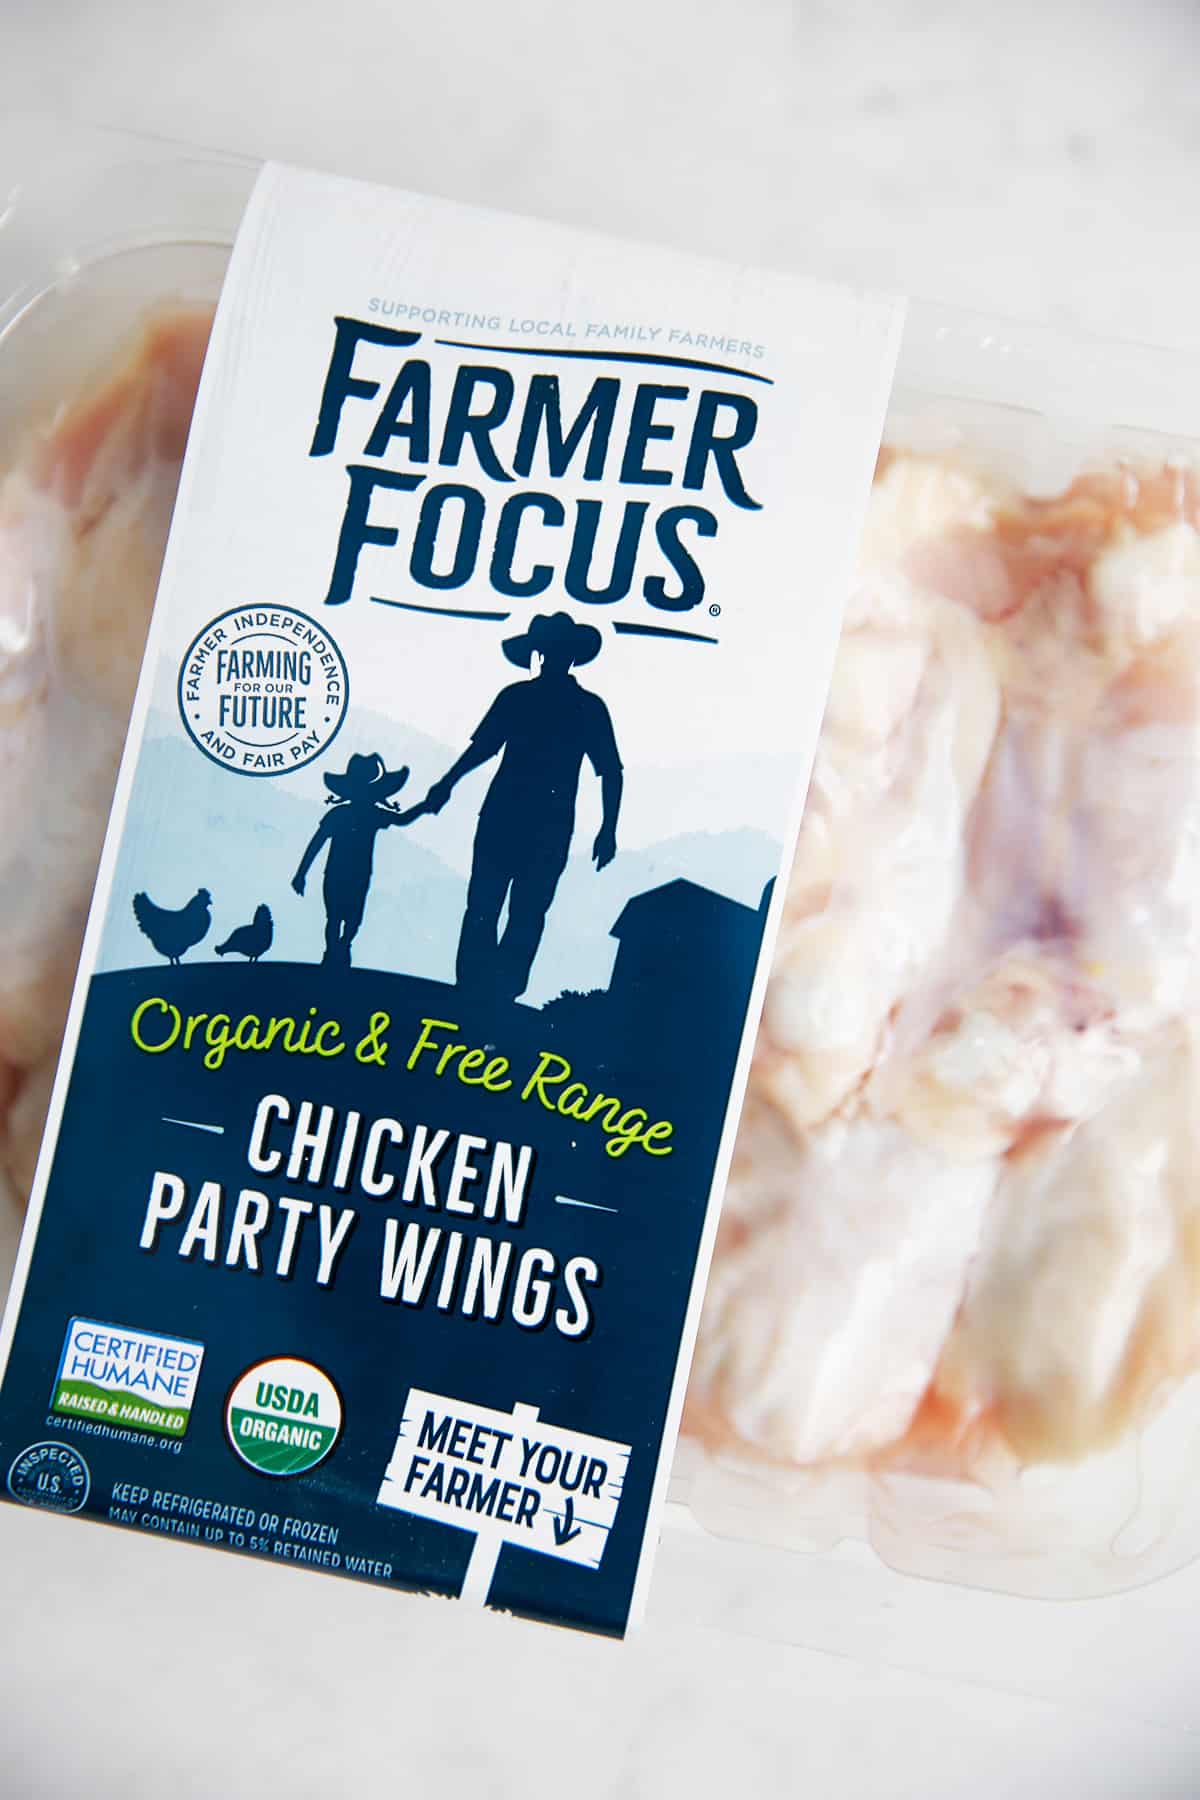 Farmer focus air fryer chicken wing package.